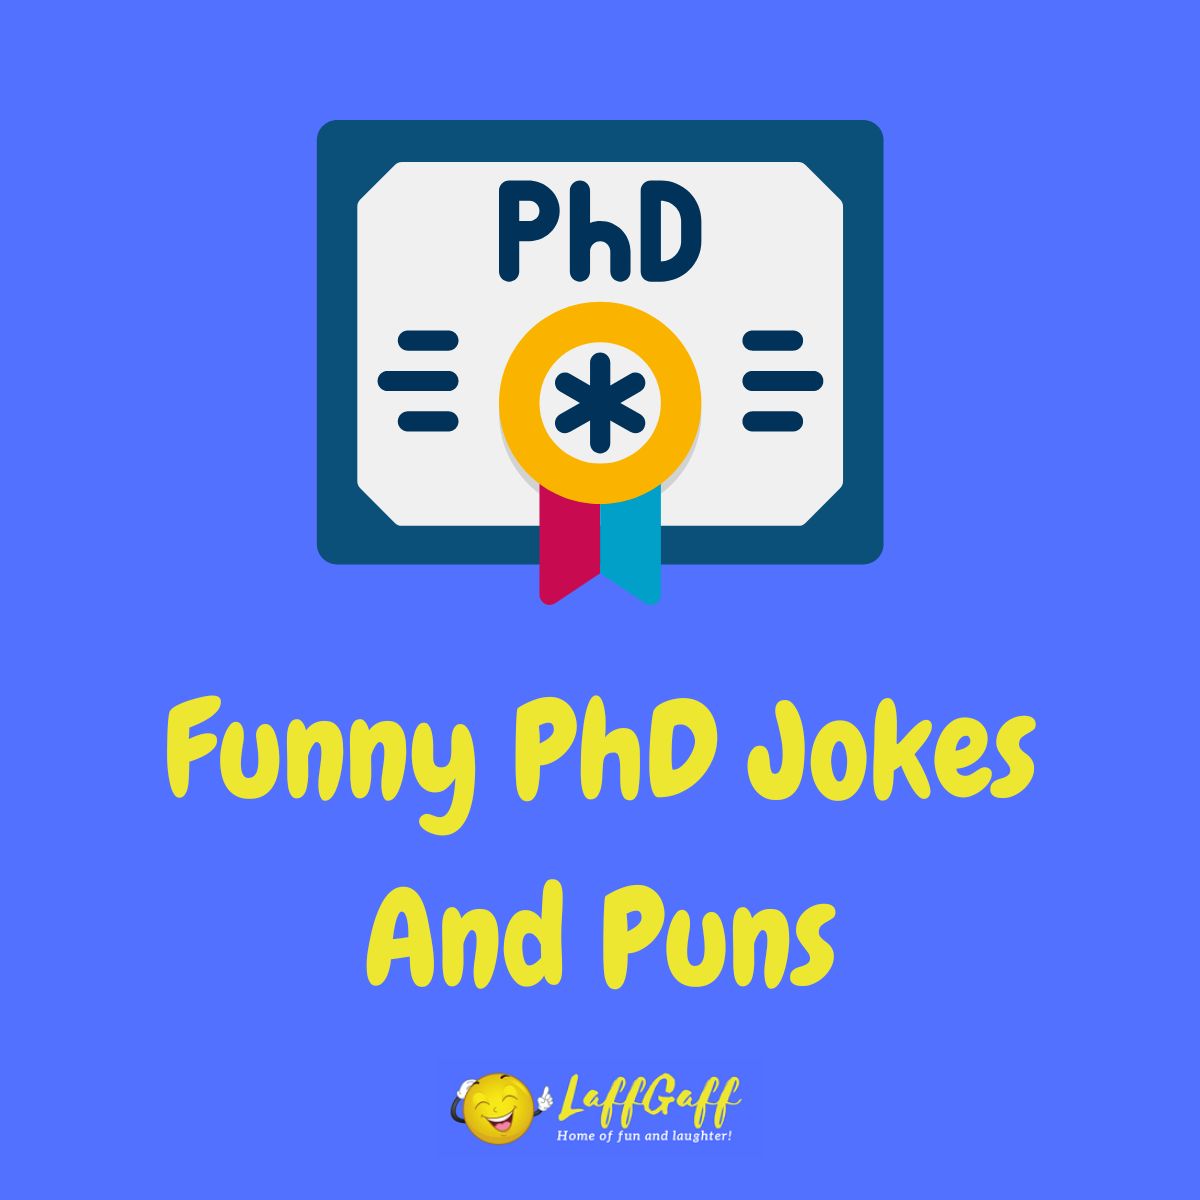 phd acronym jokes